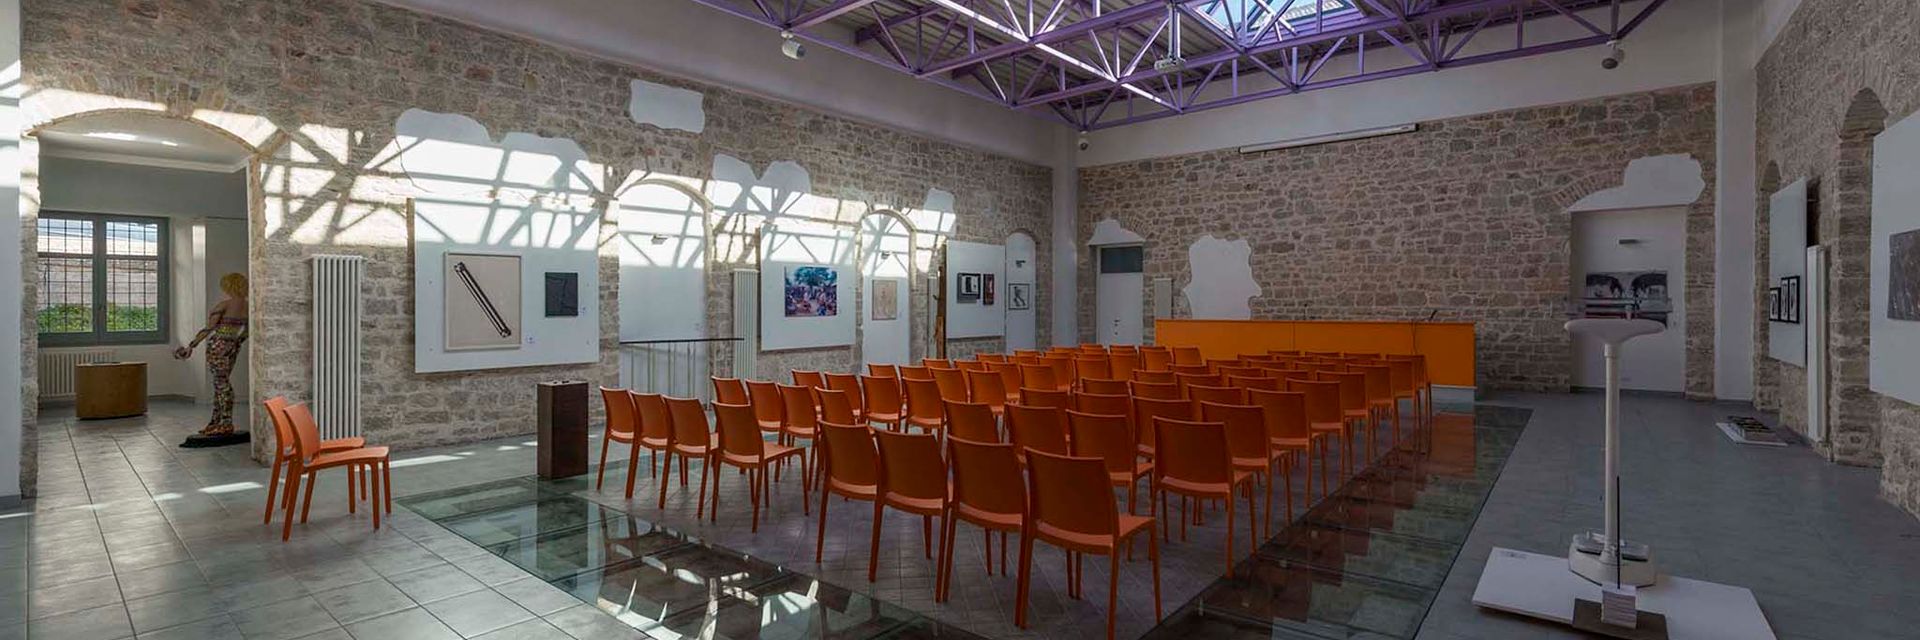 Galerie Civique d'Art Contemporain Franco Libertucci